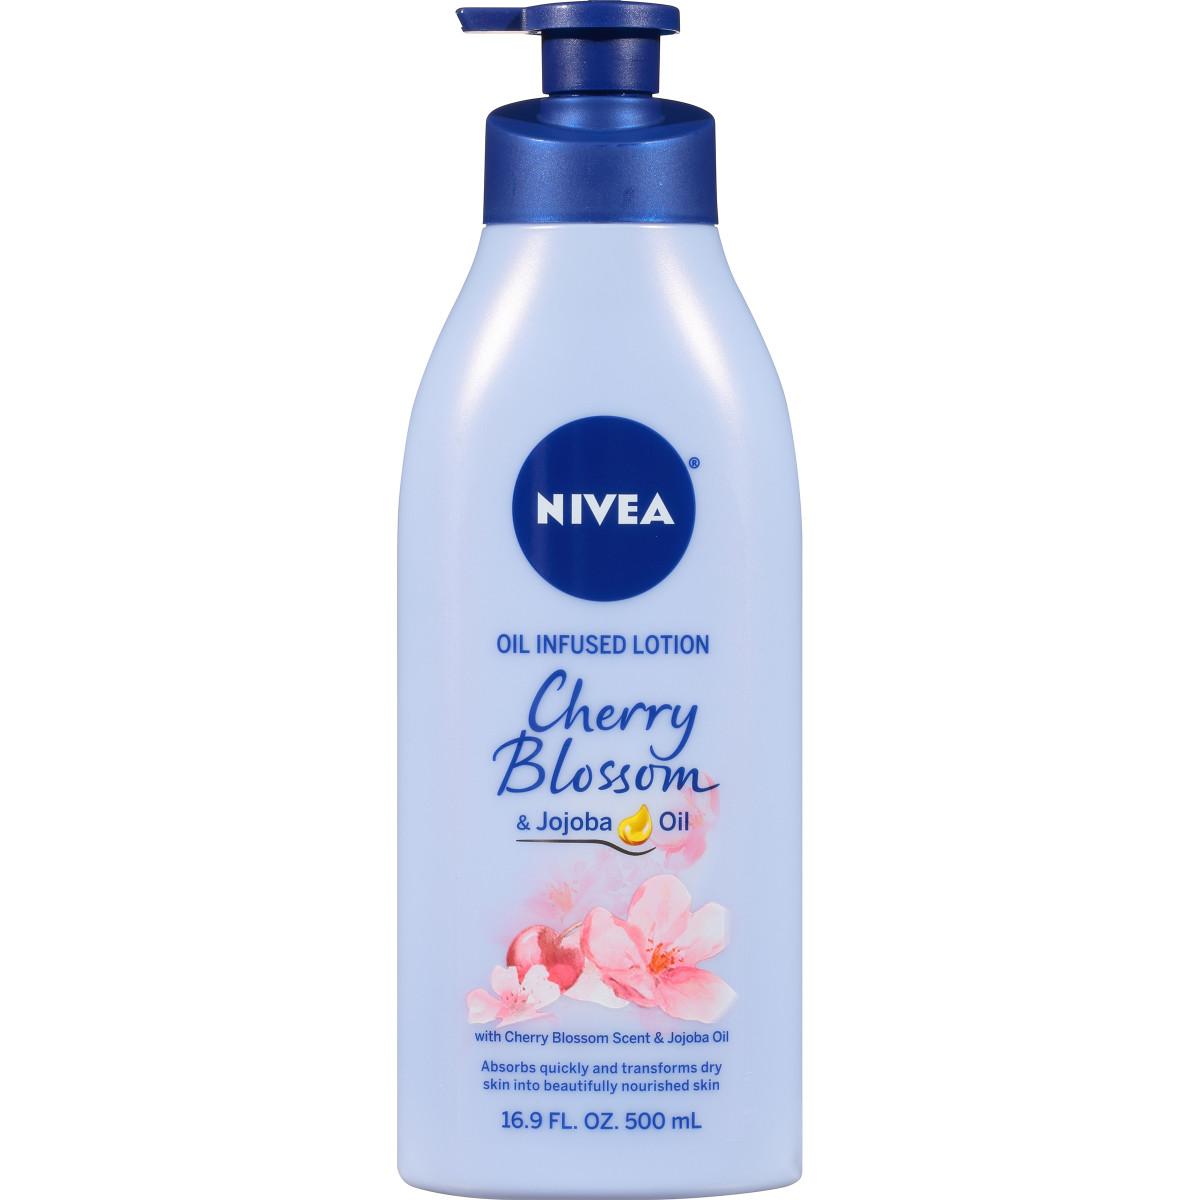 NIVEA Oil Infused Body Lotion Cherry Blossom and Jojoba Oil